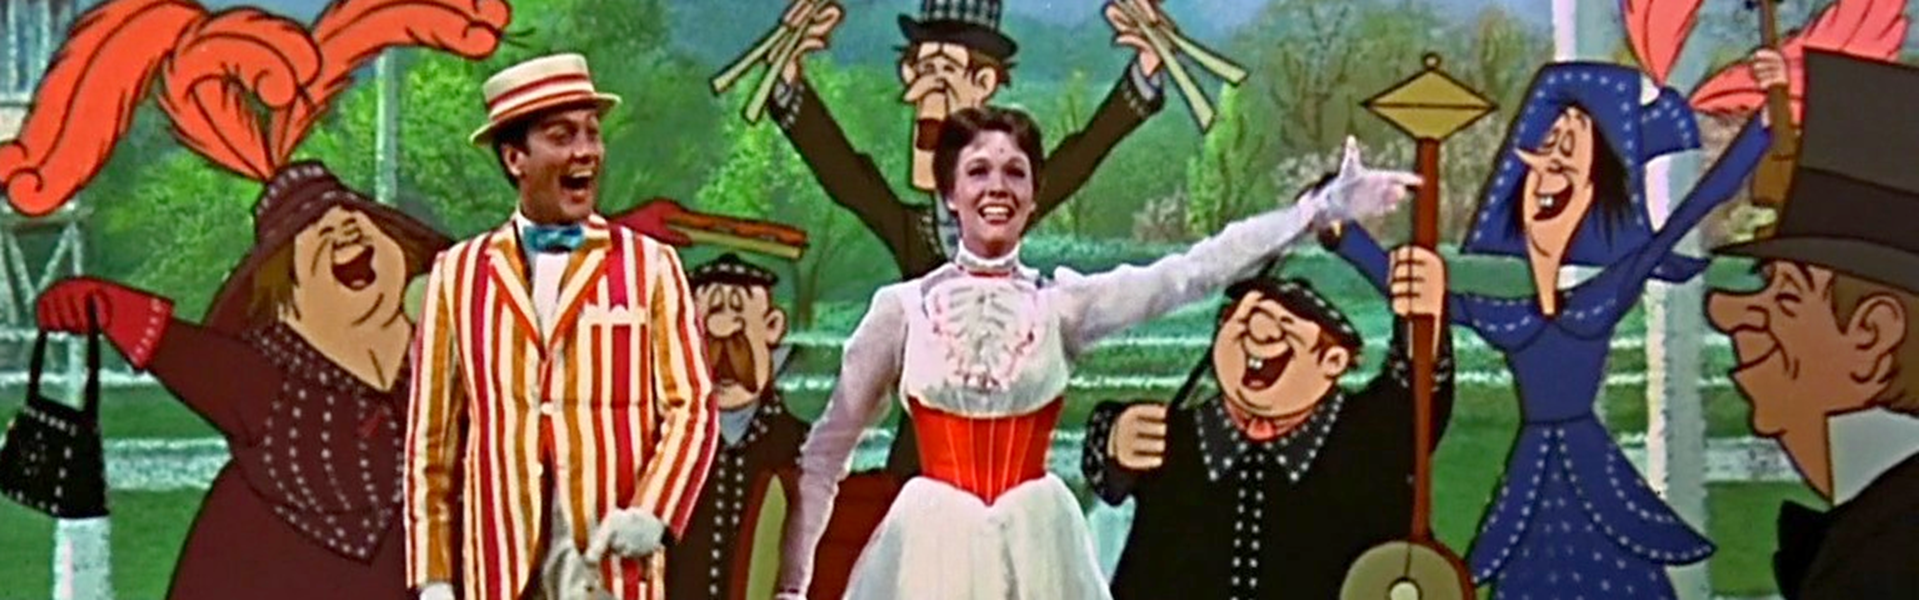 FILM: Mary Poppins (U) - Midweek Movies